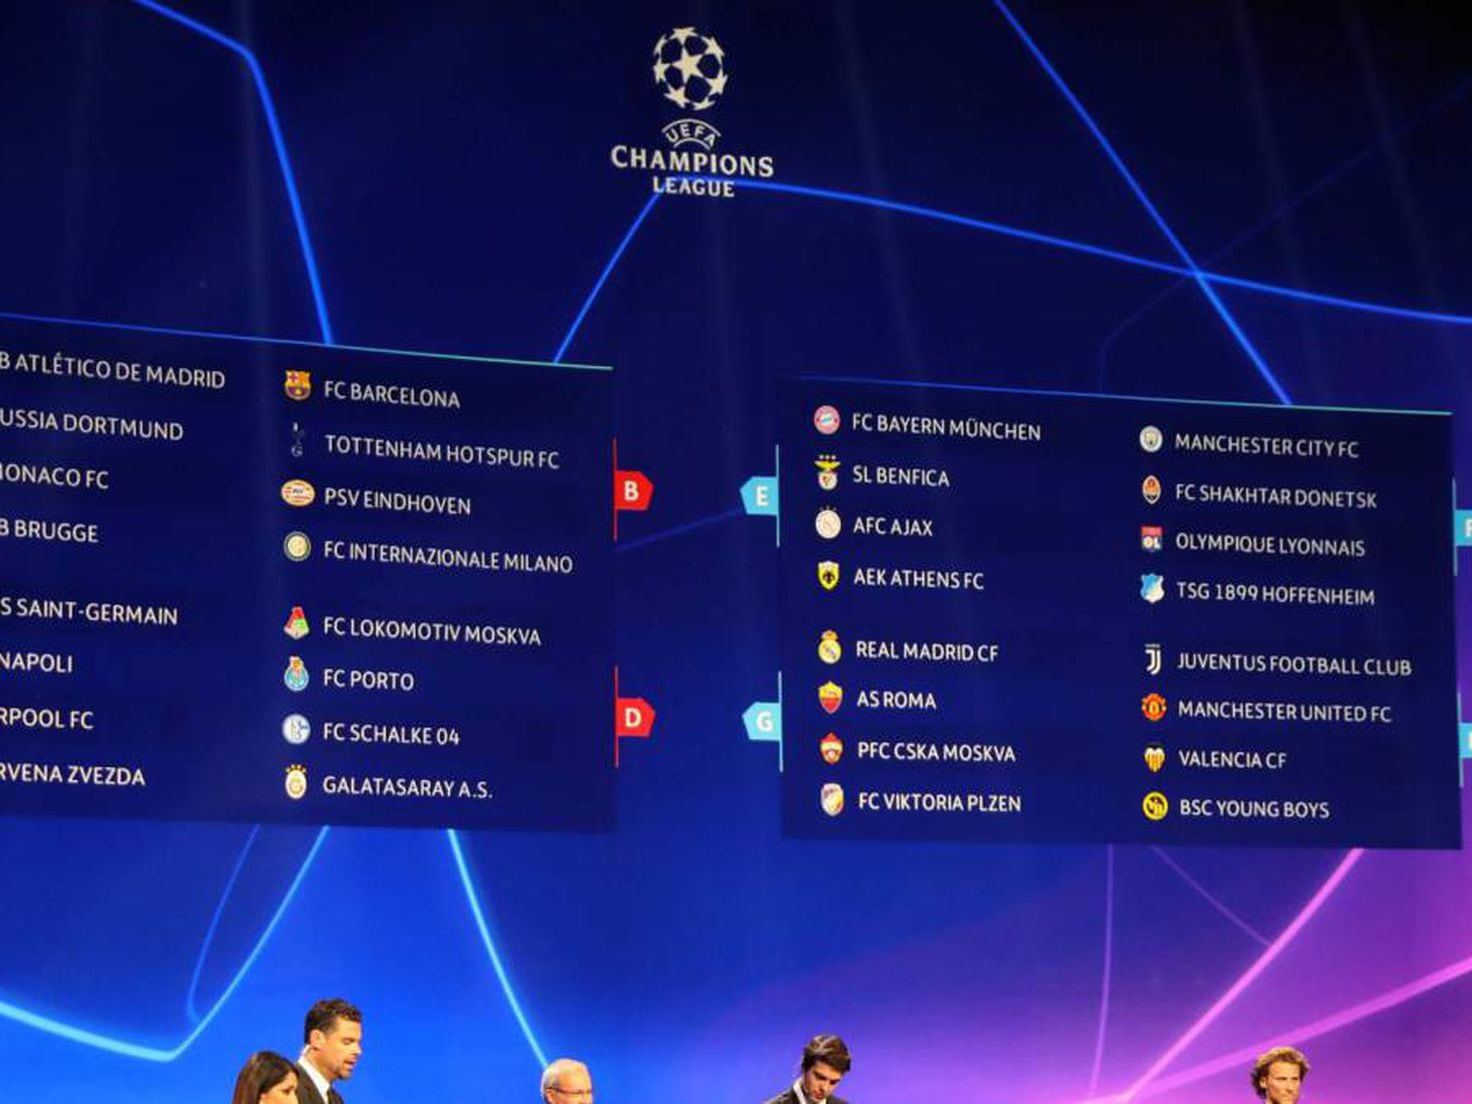 UEFA Champions League Squad of the Season for 2018/19 revealed